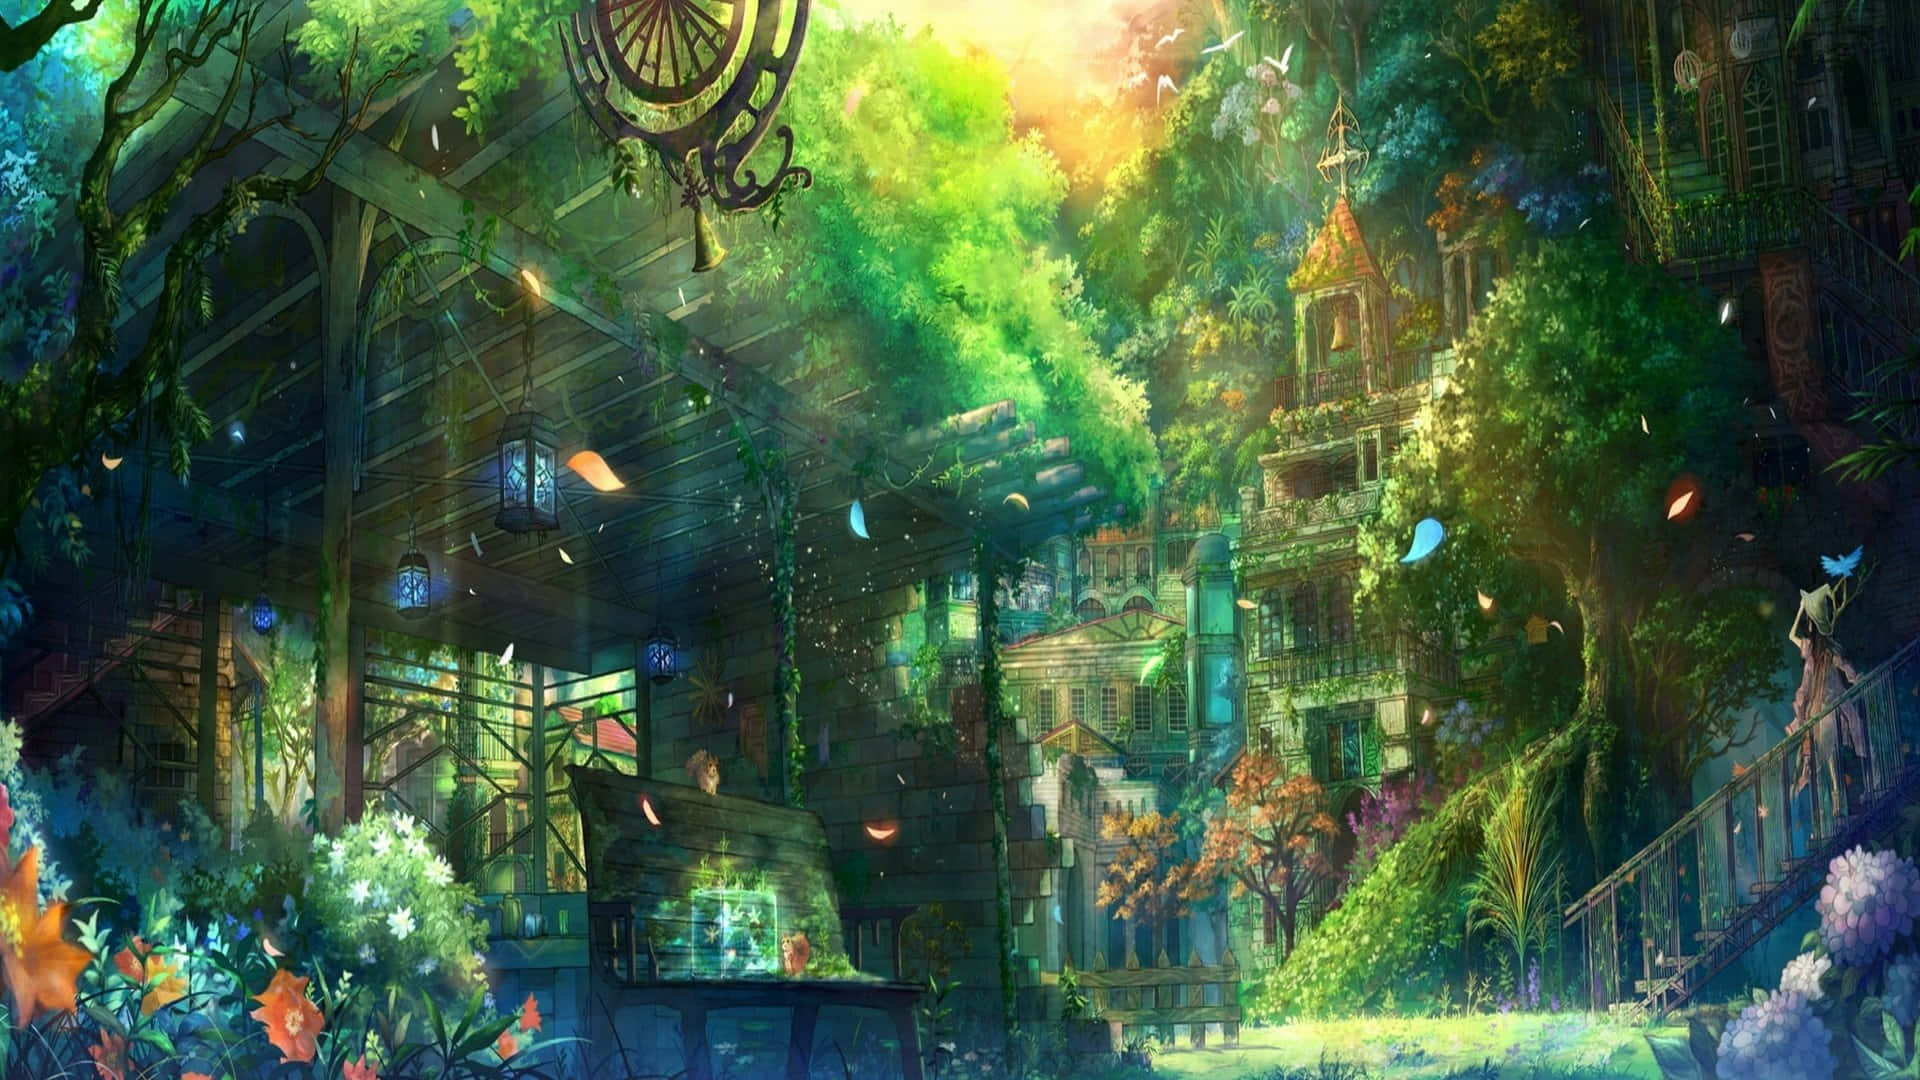 Enchanting Aesthetic Anime Cityscape at Dusk